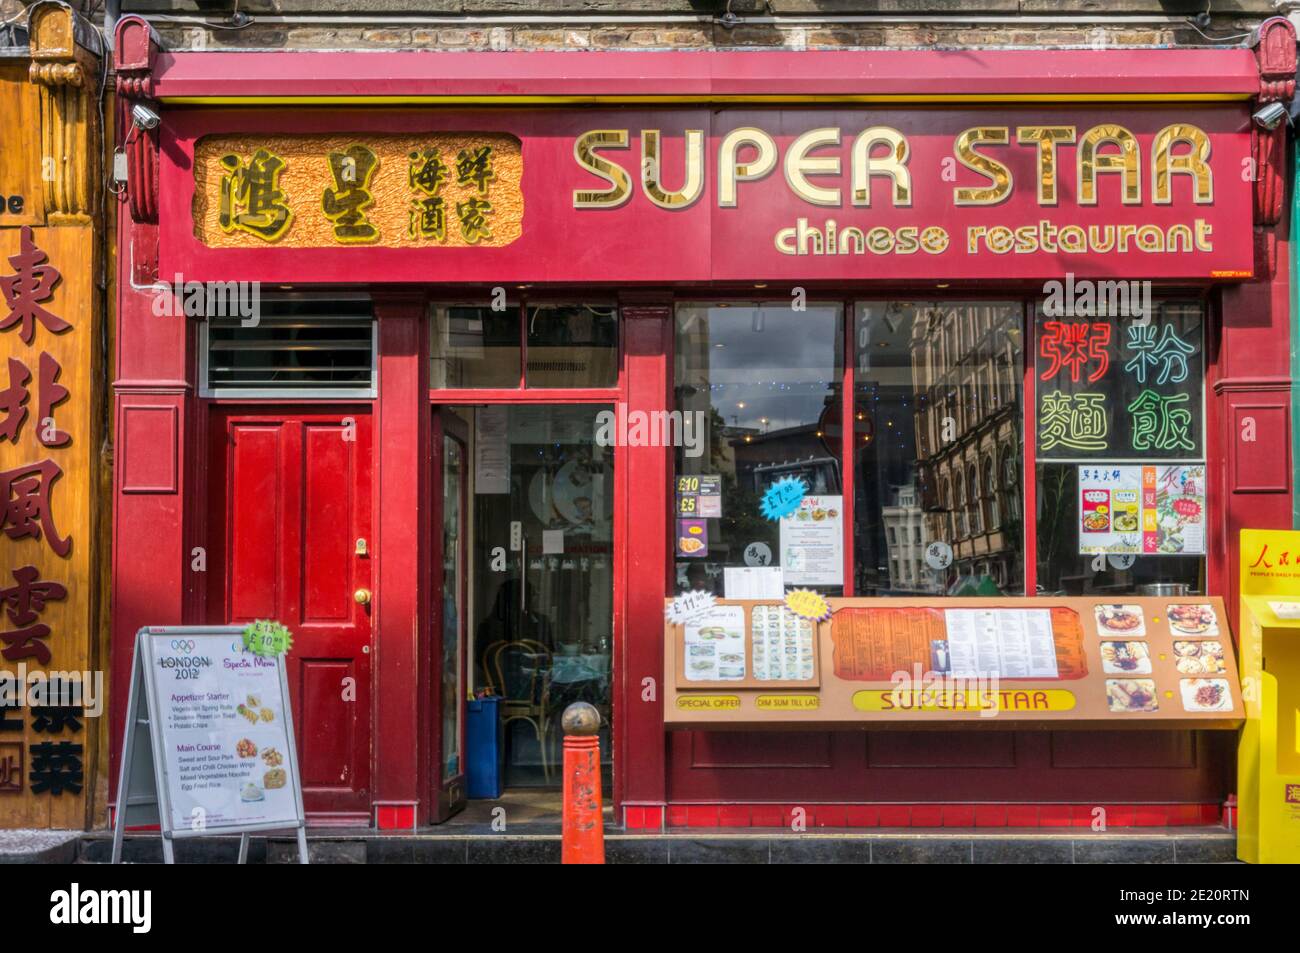 Archive image of Superstar Chinese Restaurant in Soho. Closed after coronavirus lockdown. Stock Photo